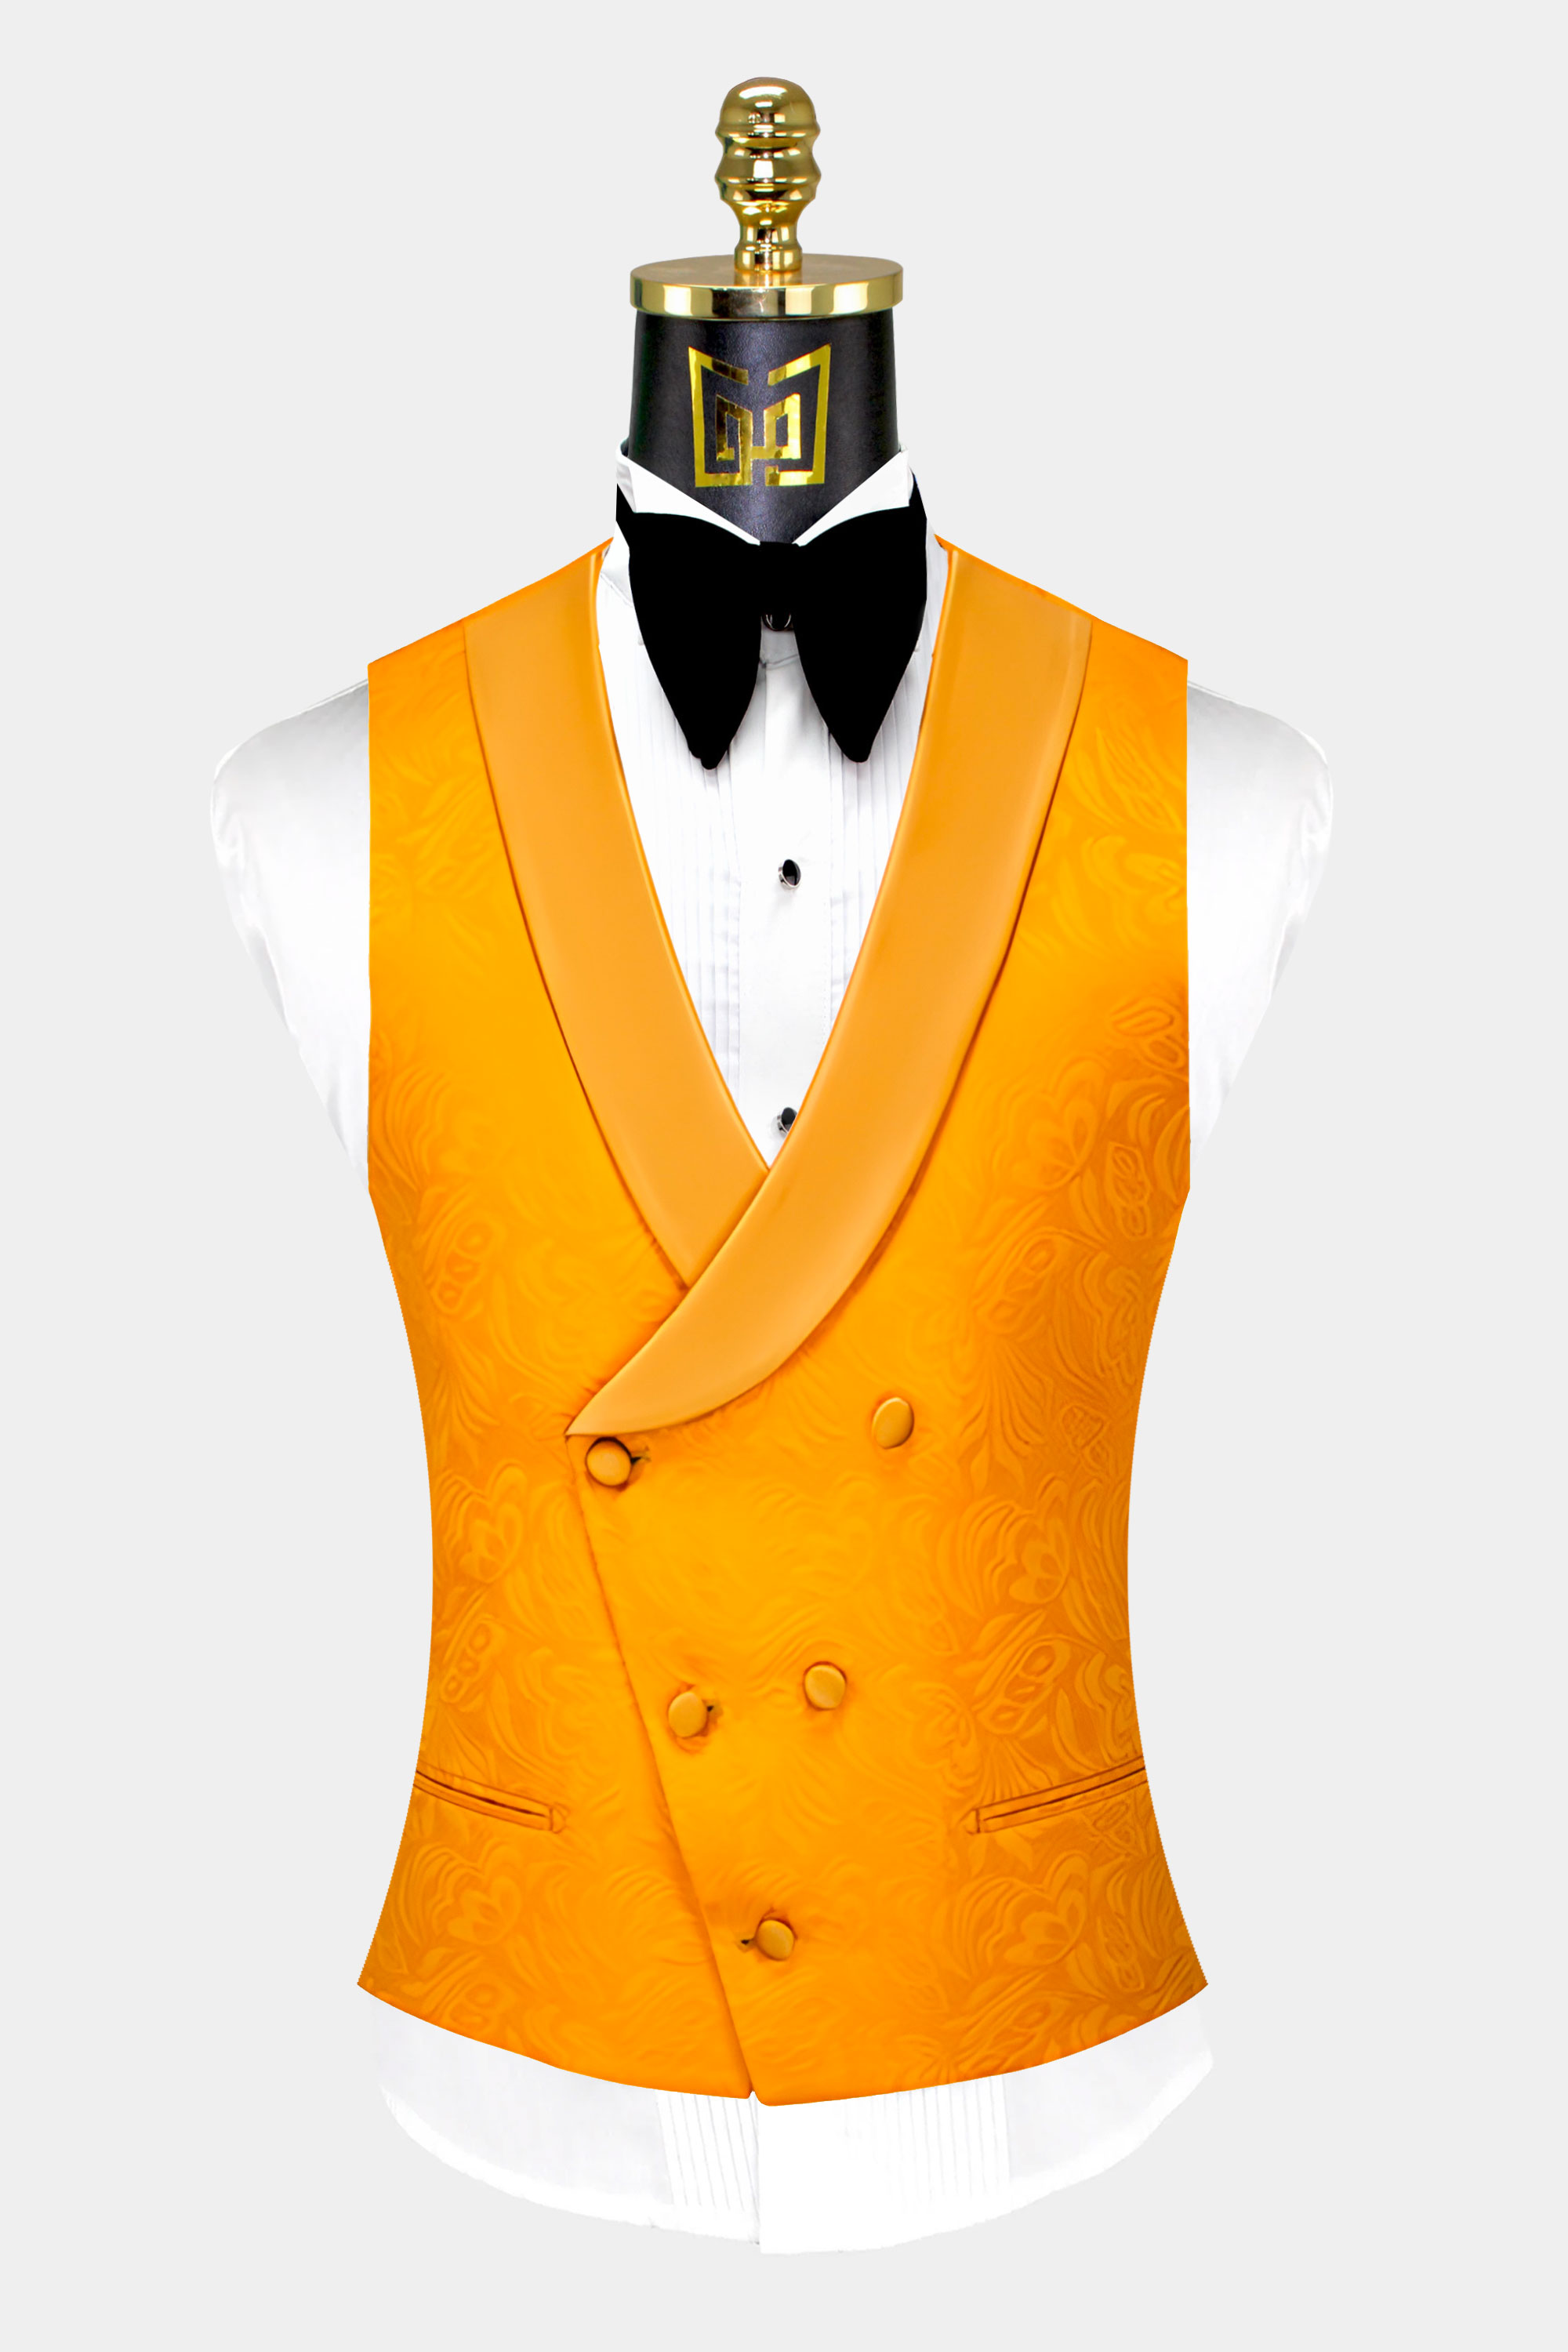 Gold-Orange-Floral-Tuxedo-Vest-from-Gentlemansguru.com